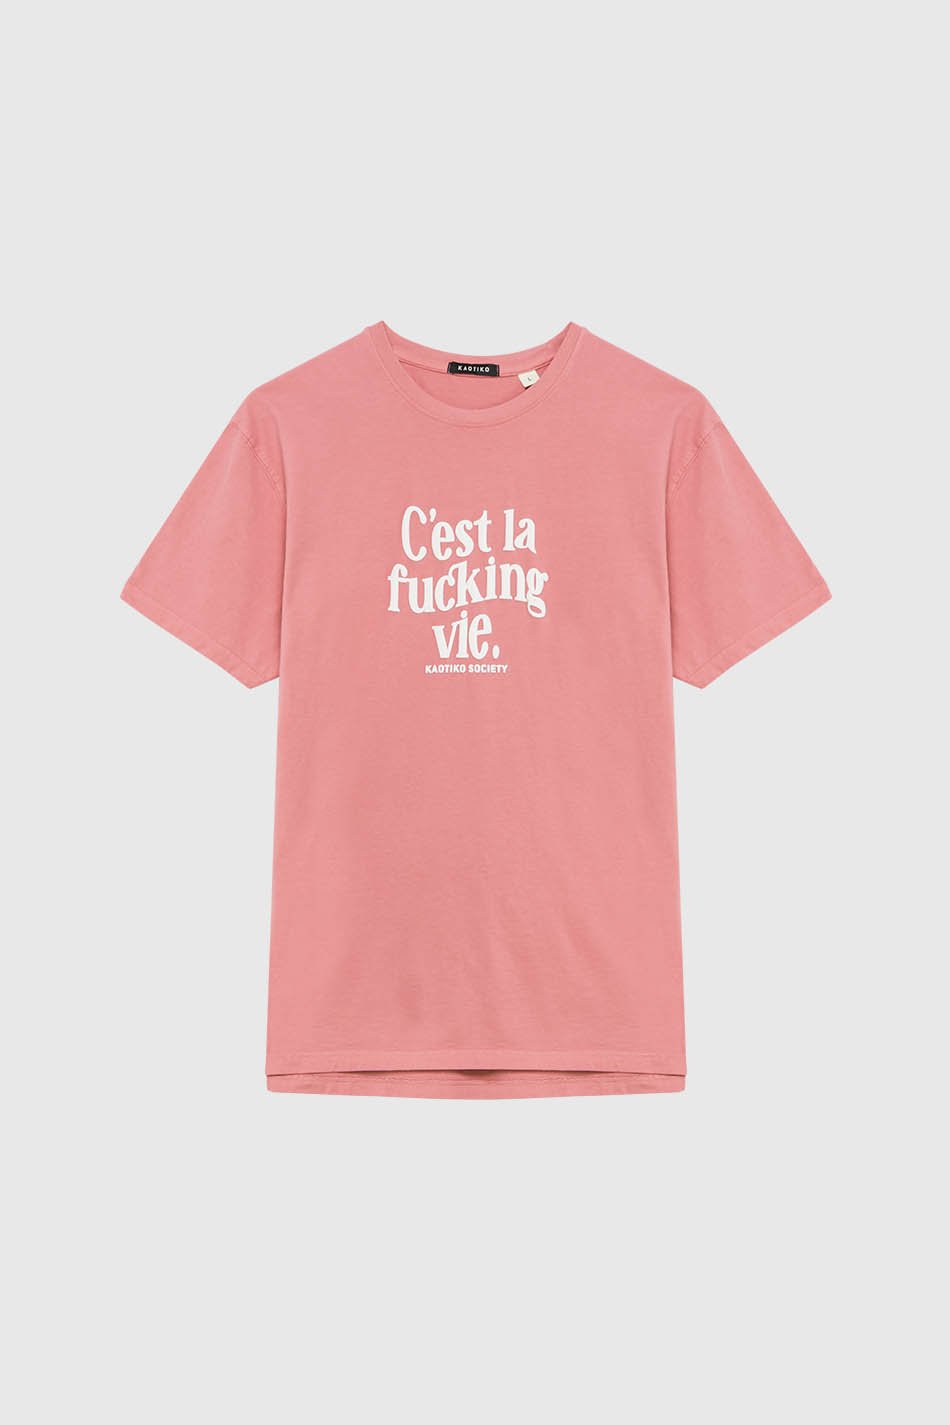 Tee-shirts Washed C'est La Vie Pink